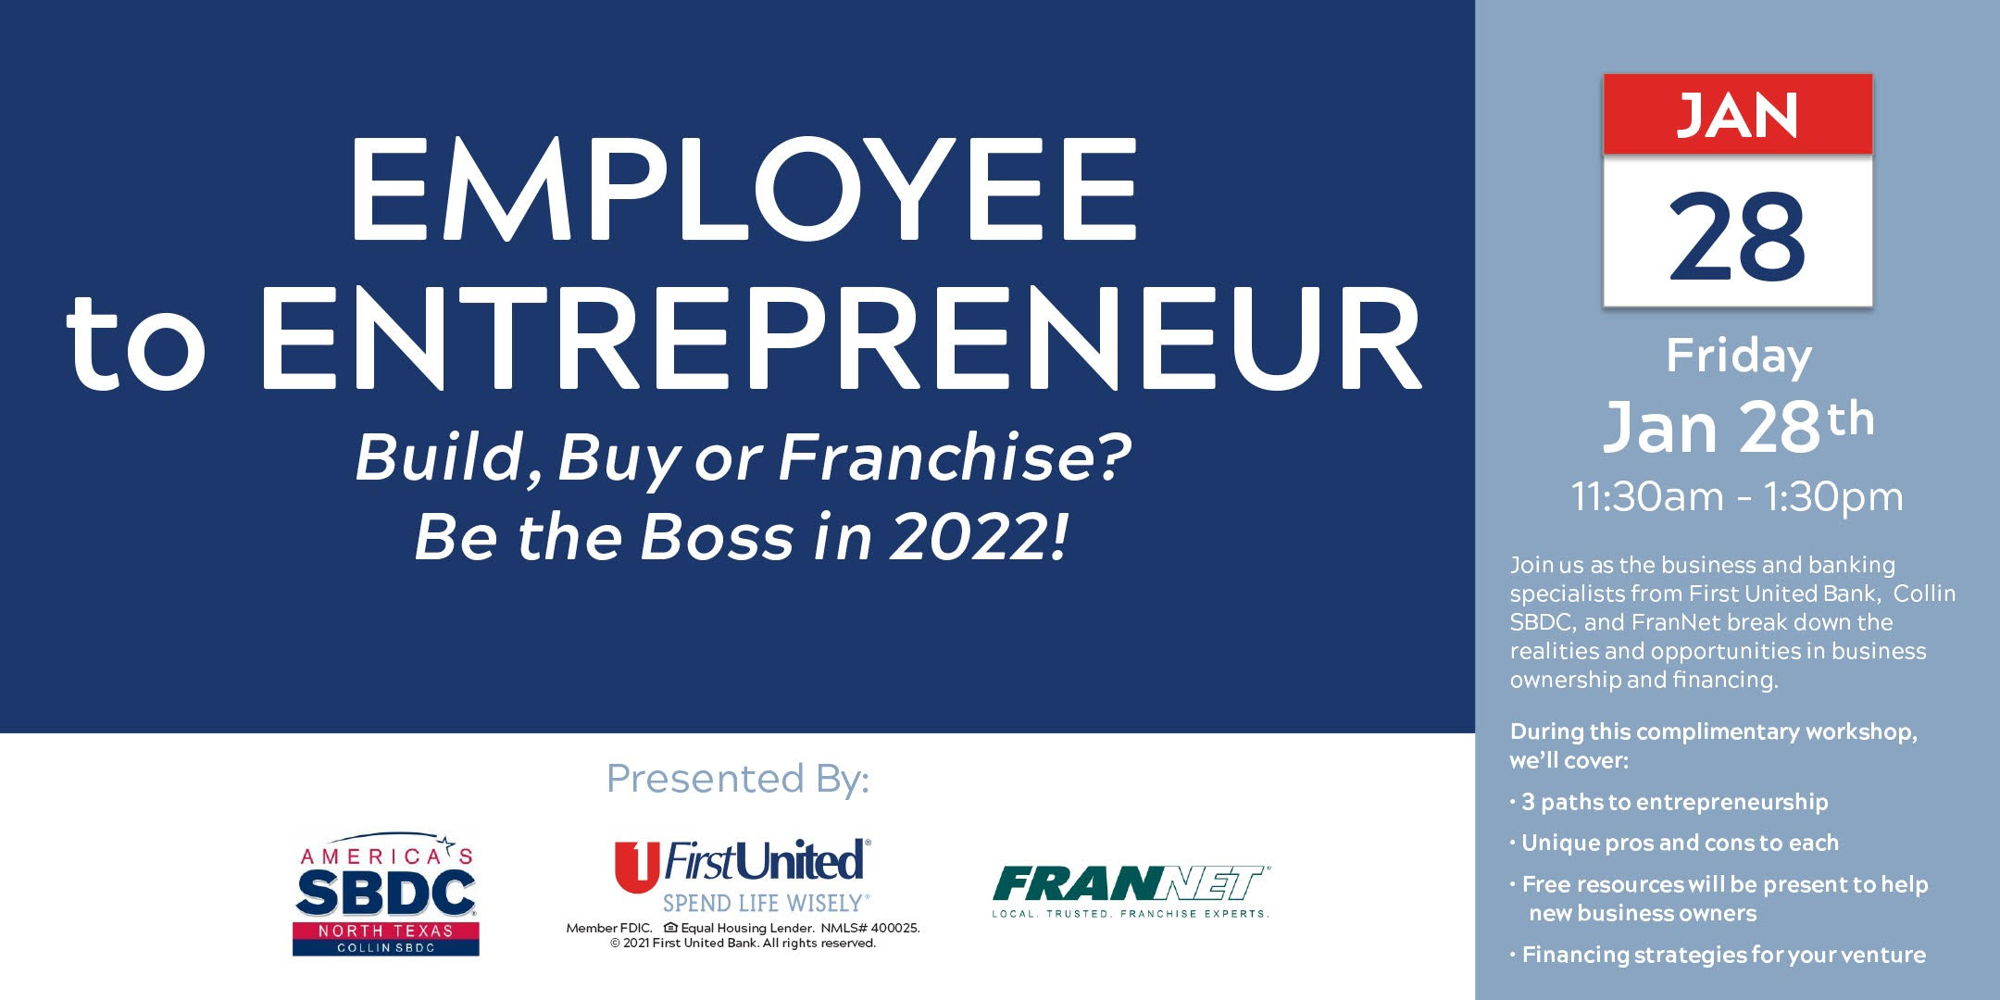 Employee to Entrepreneur promotional image